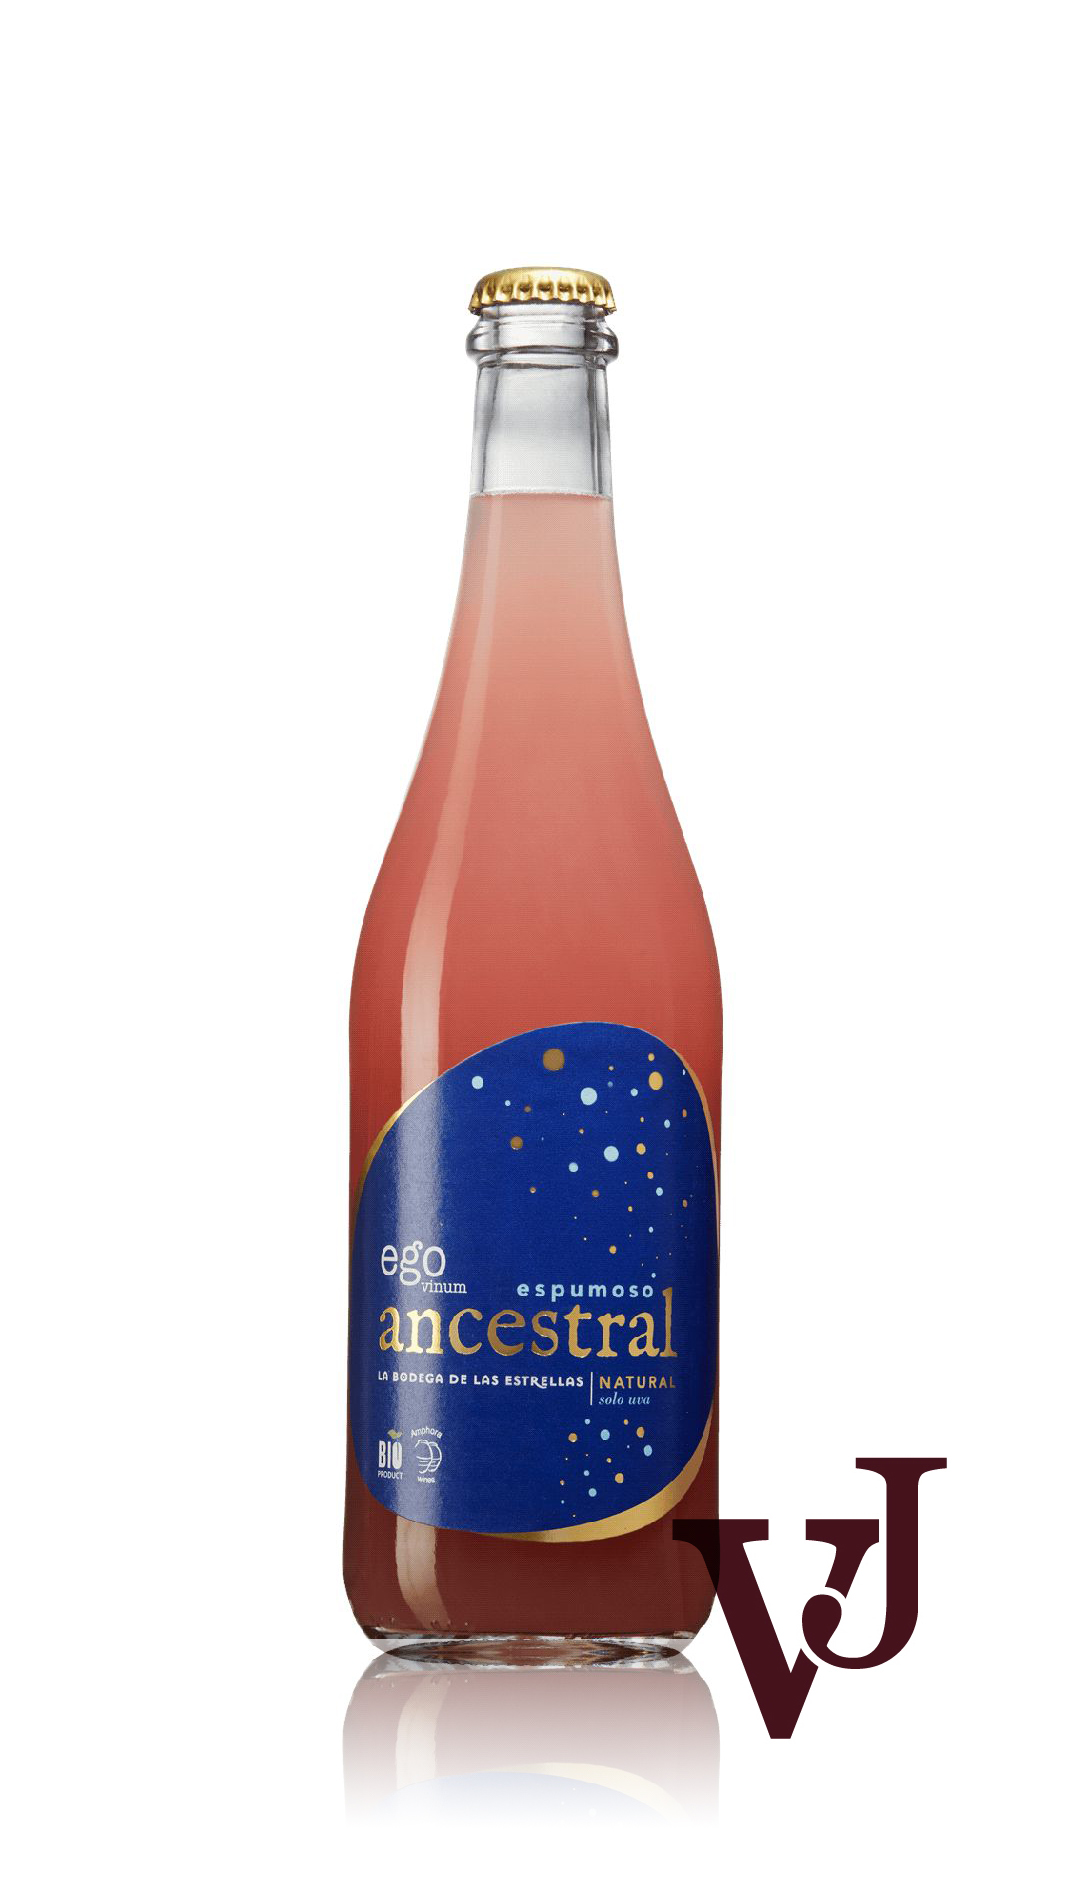 Rosé Vin - EGO Vinum Espumoso Ancestral Rosado 2022 artikel nummer 9059401 från producenten DIONISIS AGRICULTURA BIOLOGICA / LA BODEGA DE LAS ESTRLLAS från området Spanien